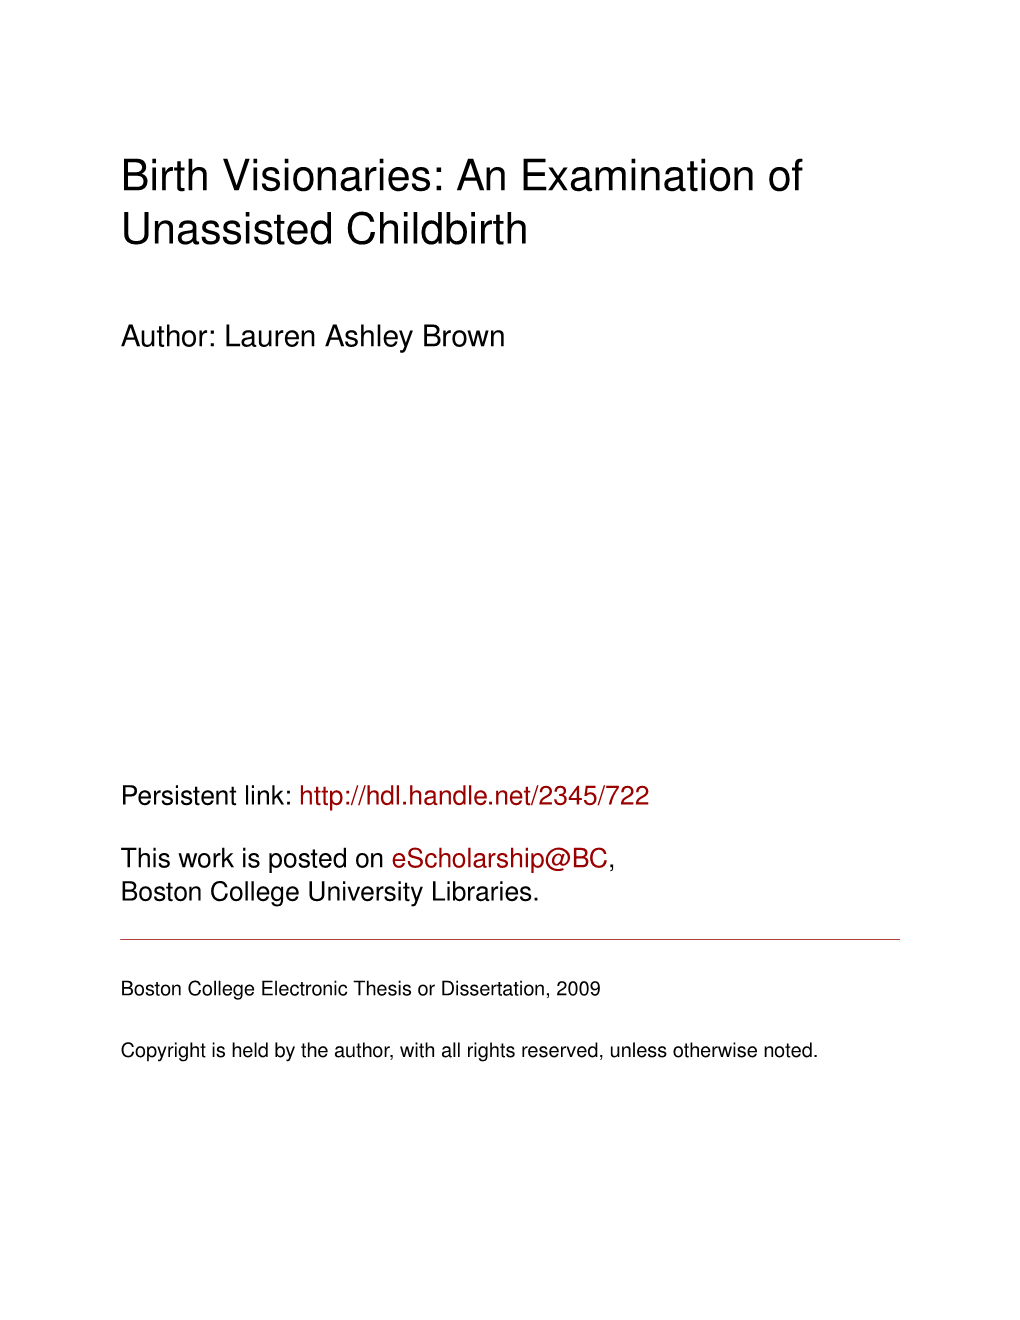 Birth Visionaries: an Examination of Unassisted Childbirth